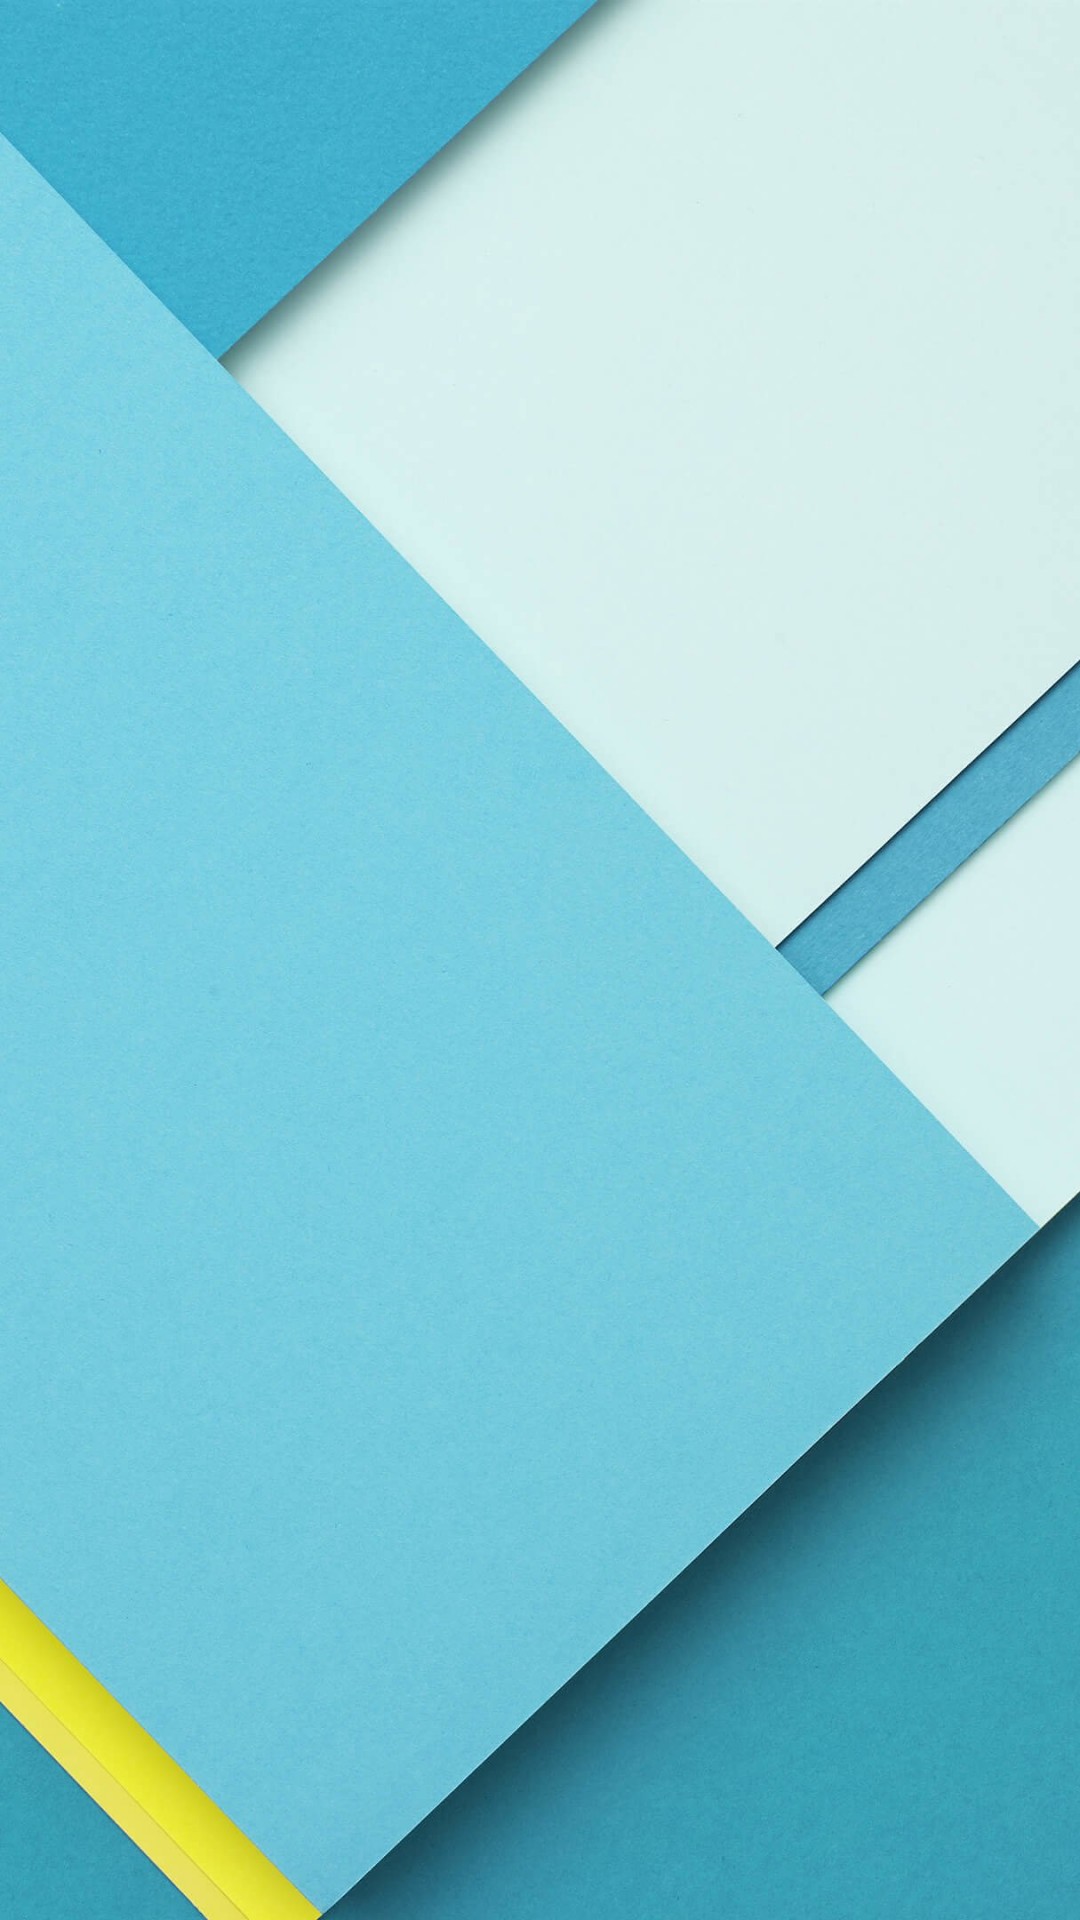 Google Material Design Wallpaper for Google Nexus 5